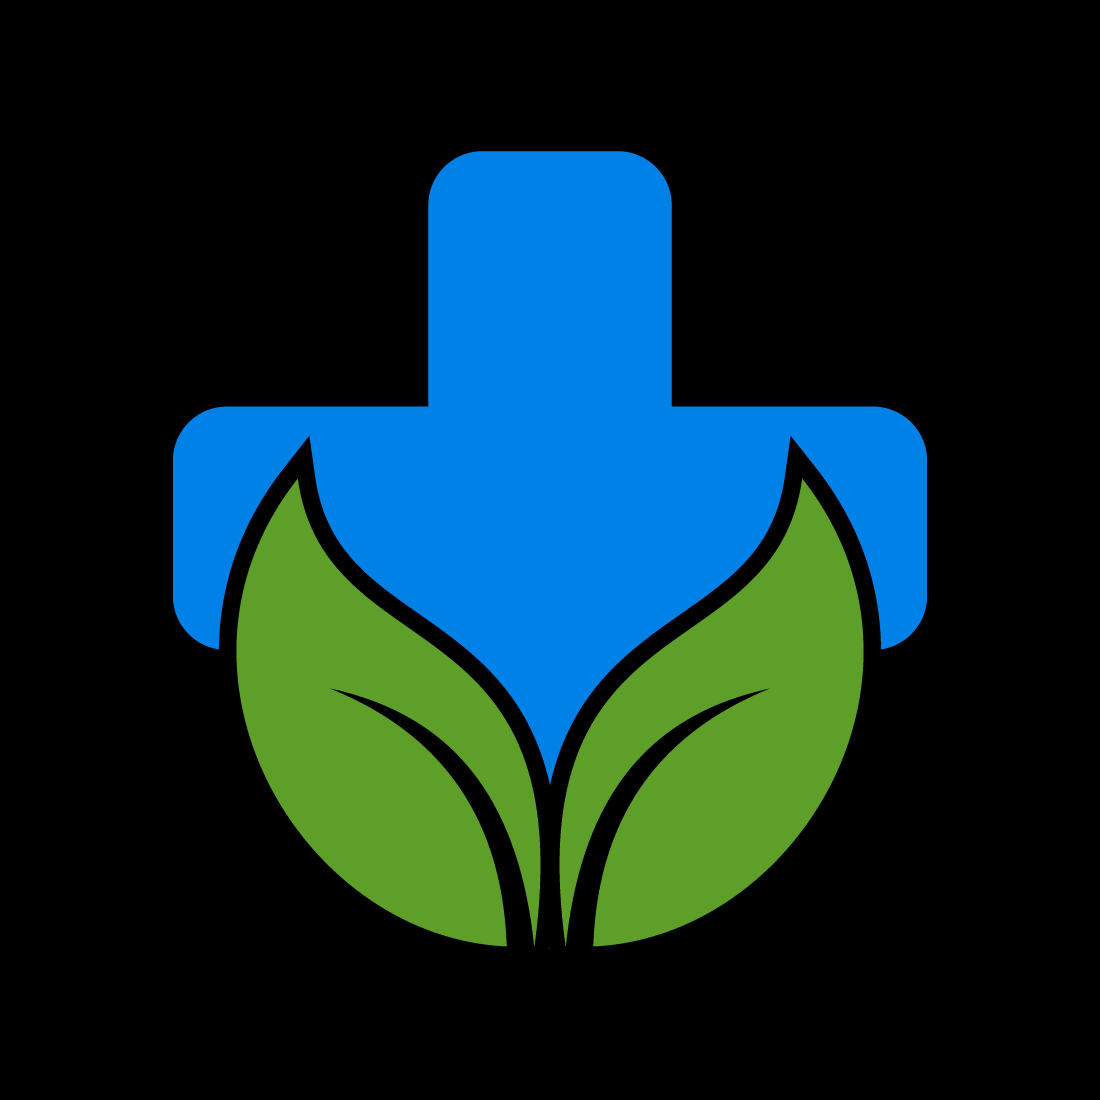 Biotechnology logo design, Vector design template cover image.